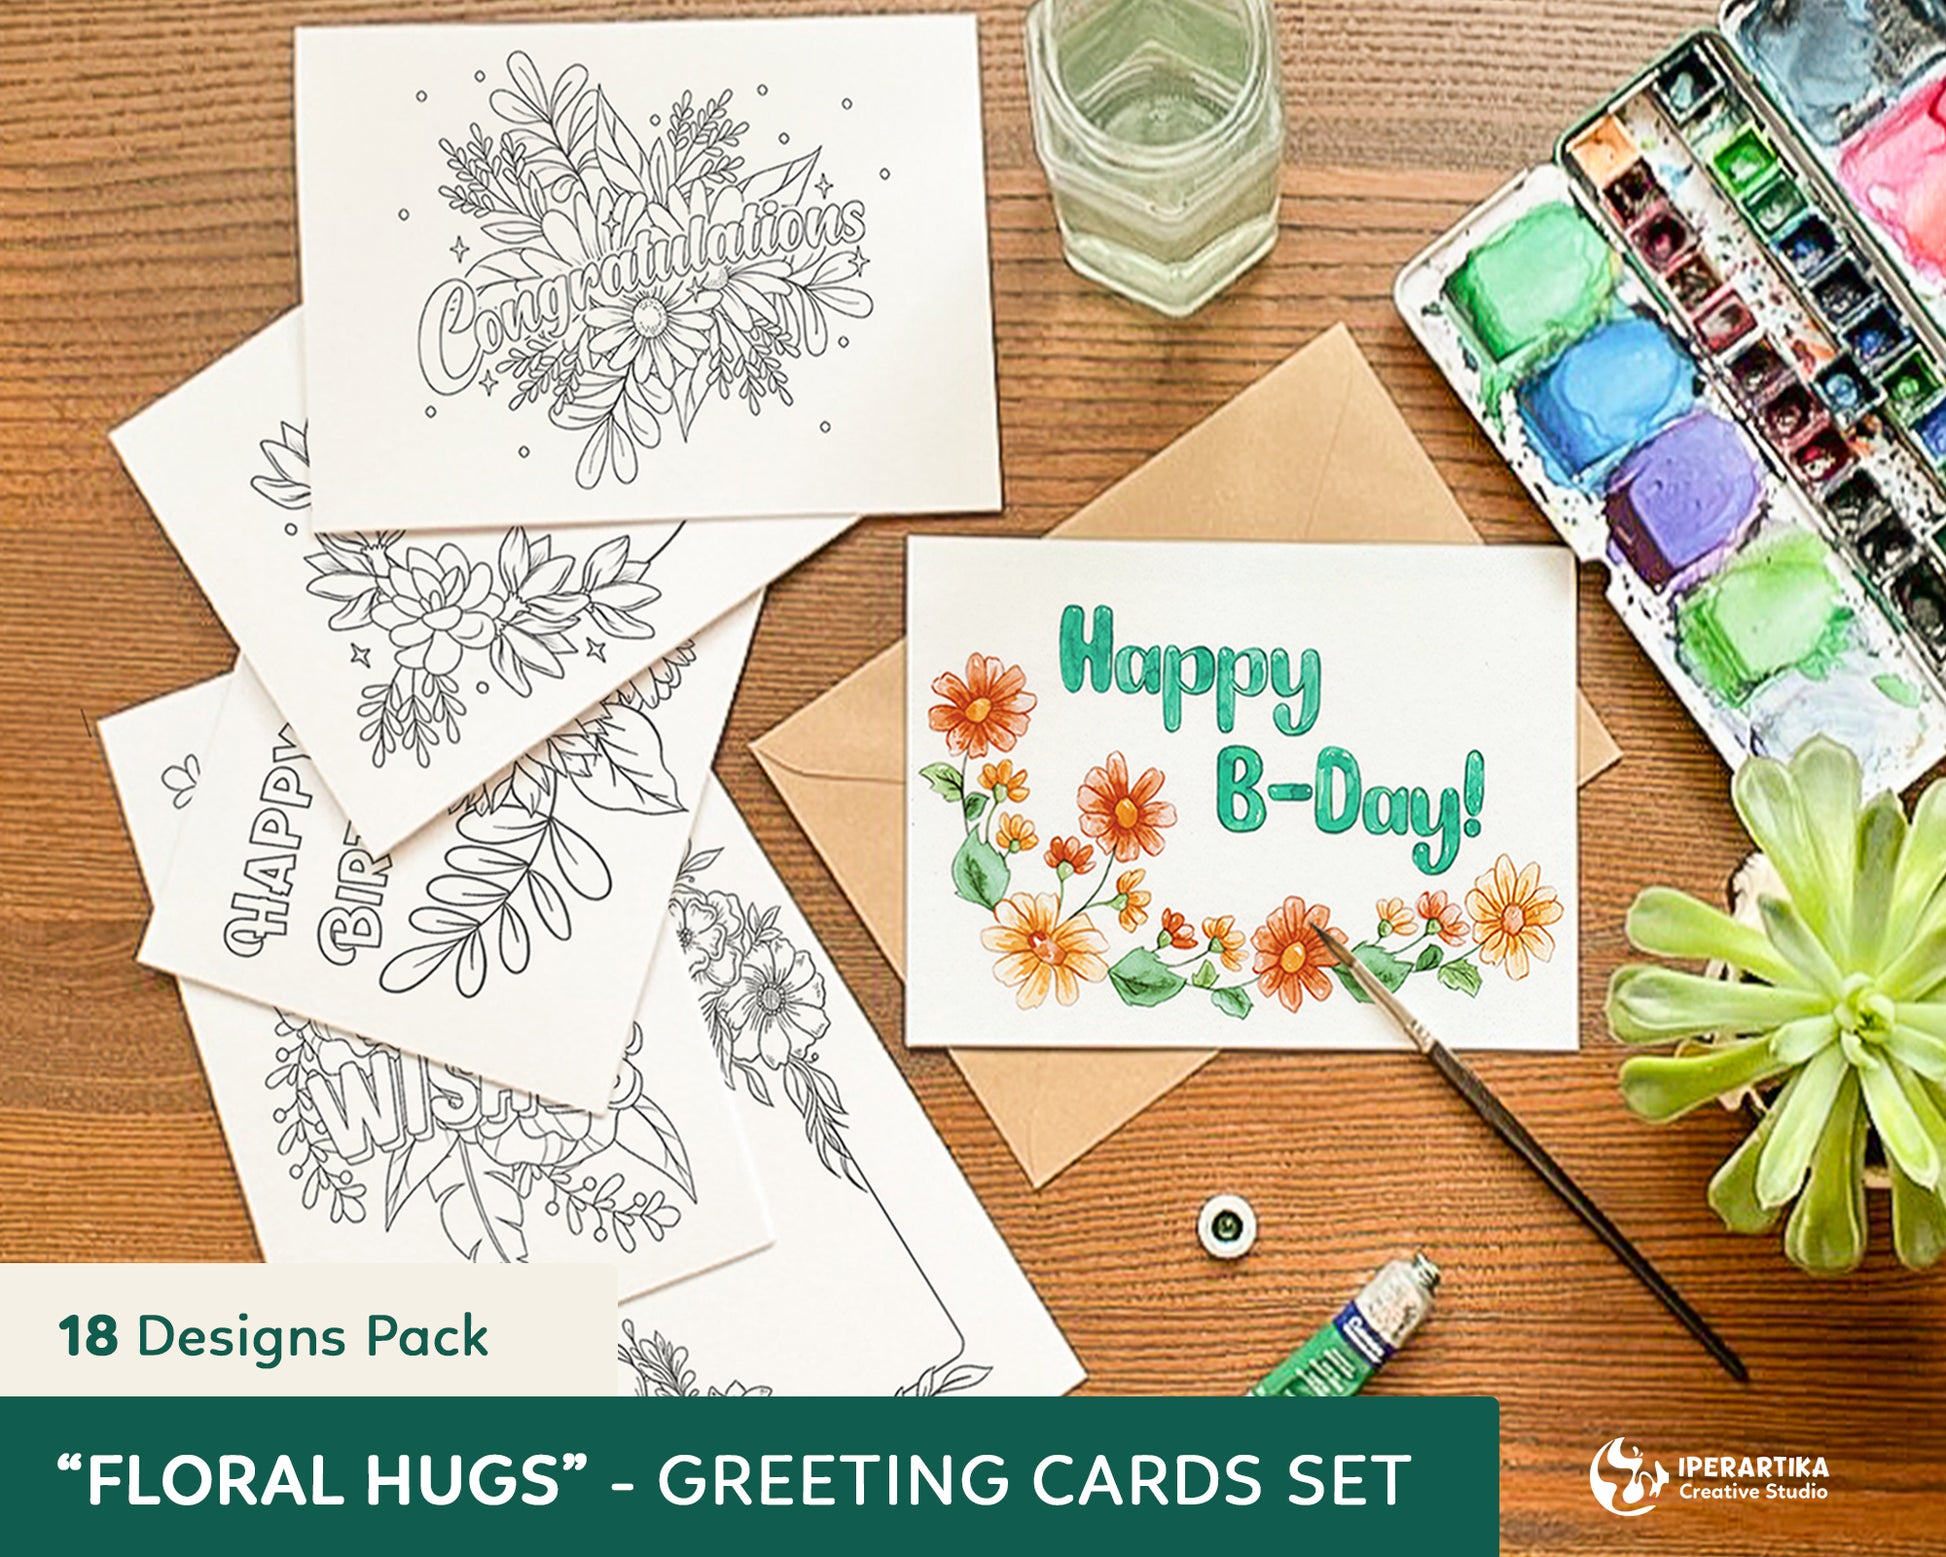 Floral Hugs GREETING CARDS SET - 18 Designs